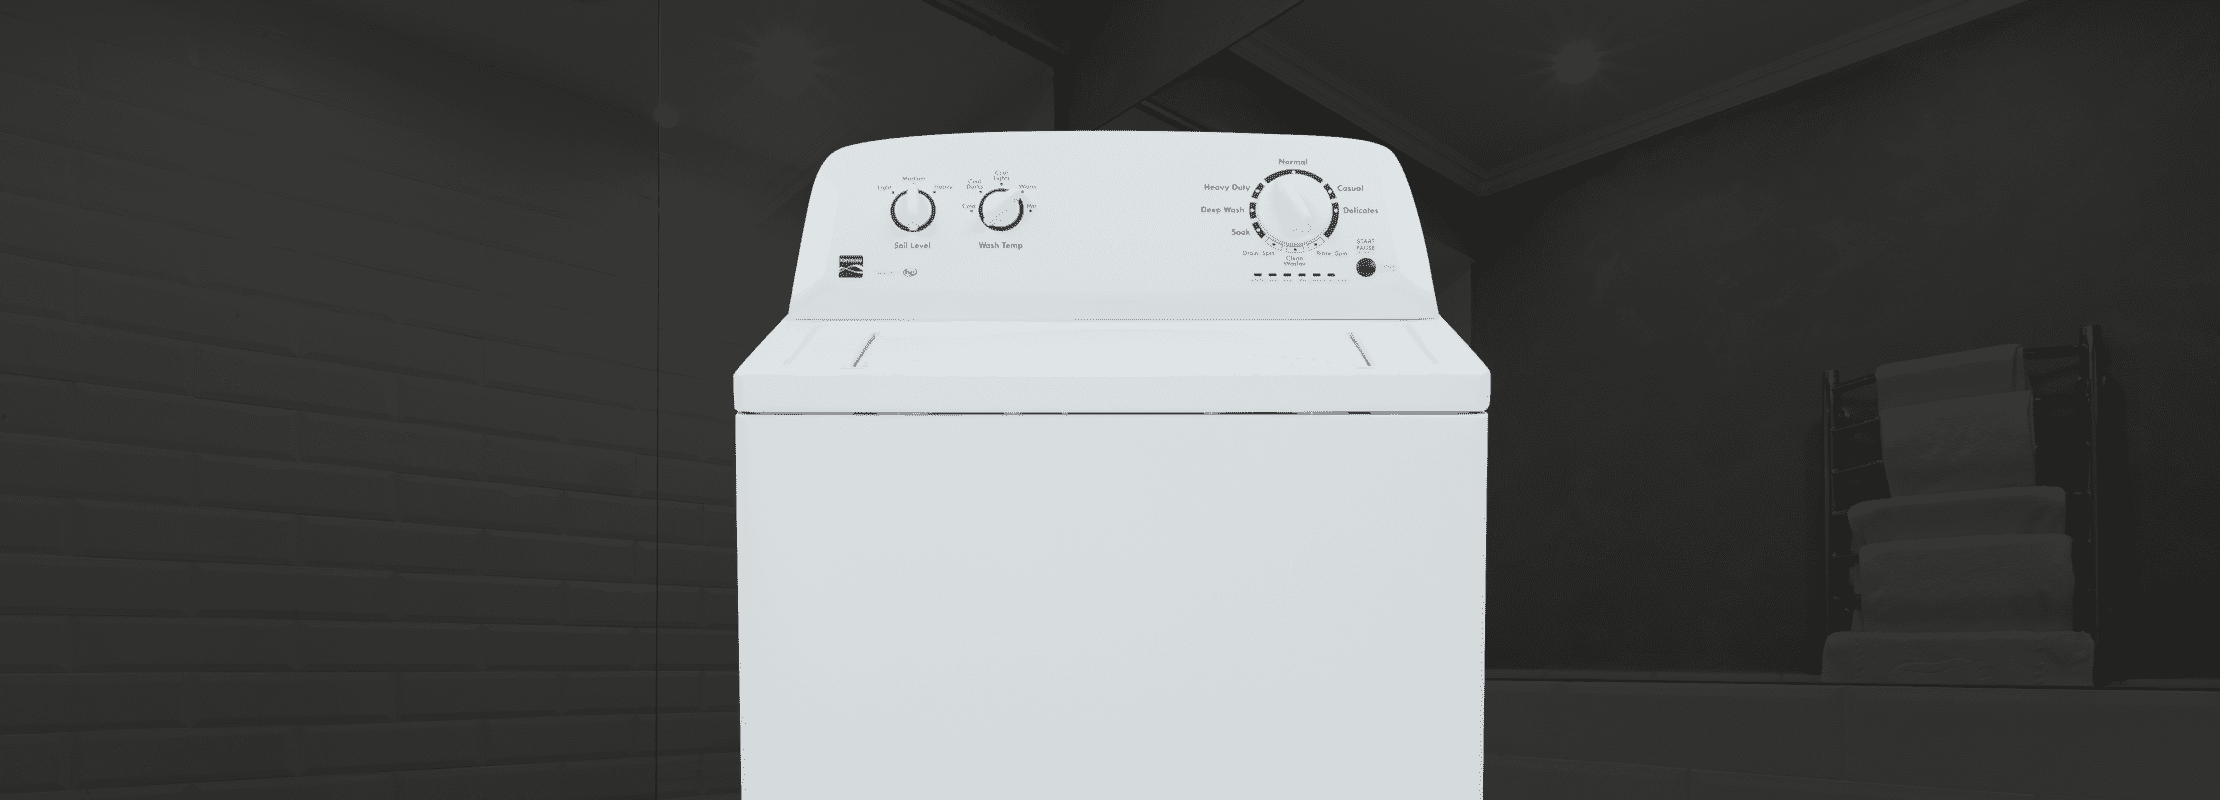 f21 error code kenmore washer